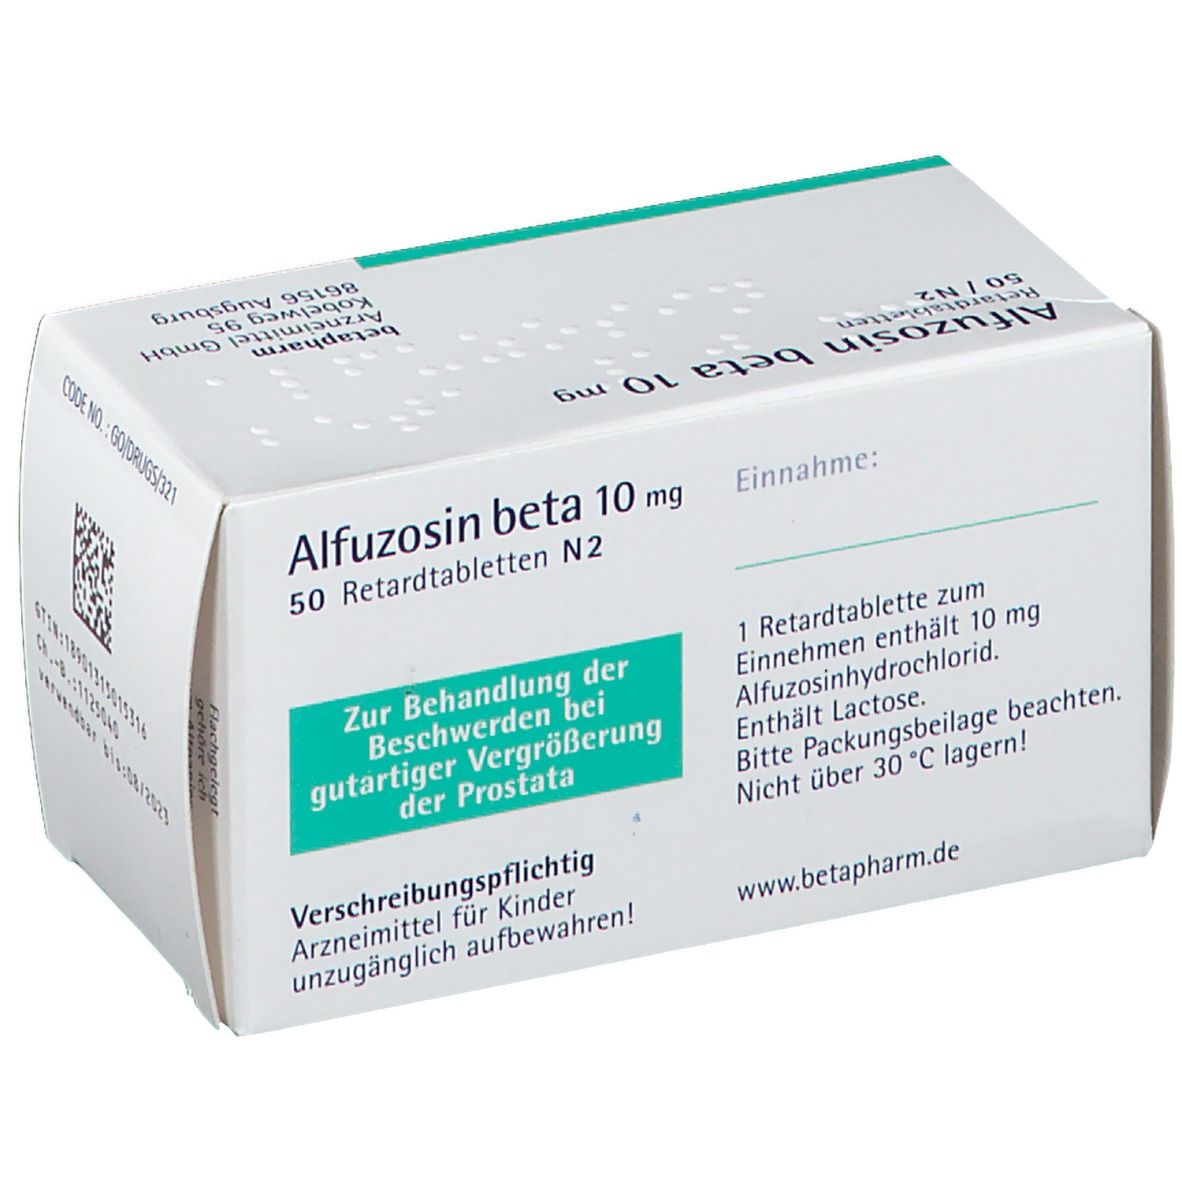 Alfuzosin beta 10 mg 50 St mit dem E-Rezept kaufen - SHOP APOTHEKE